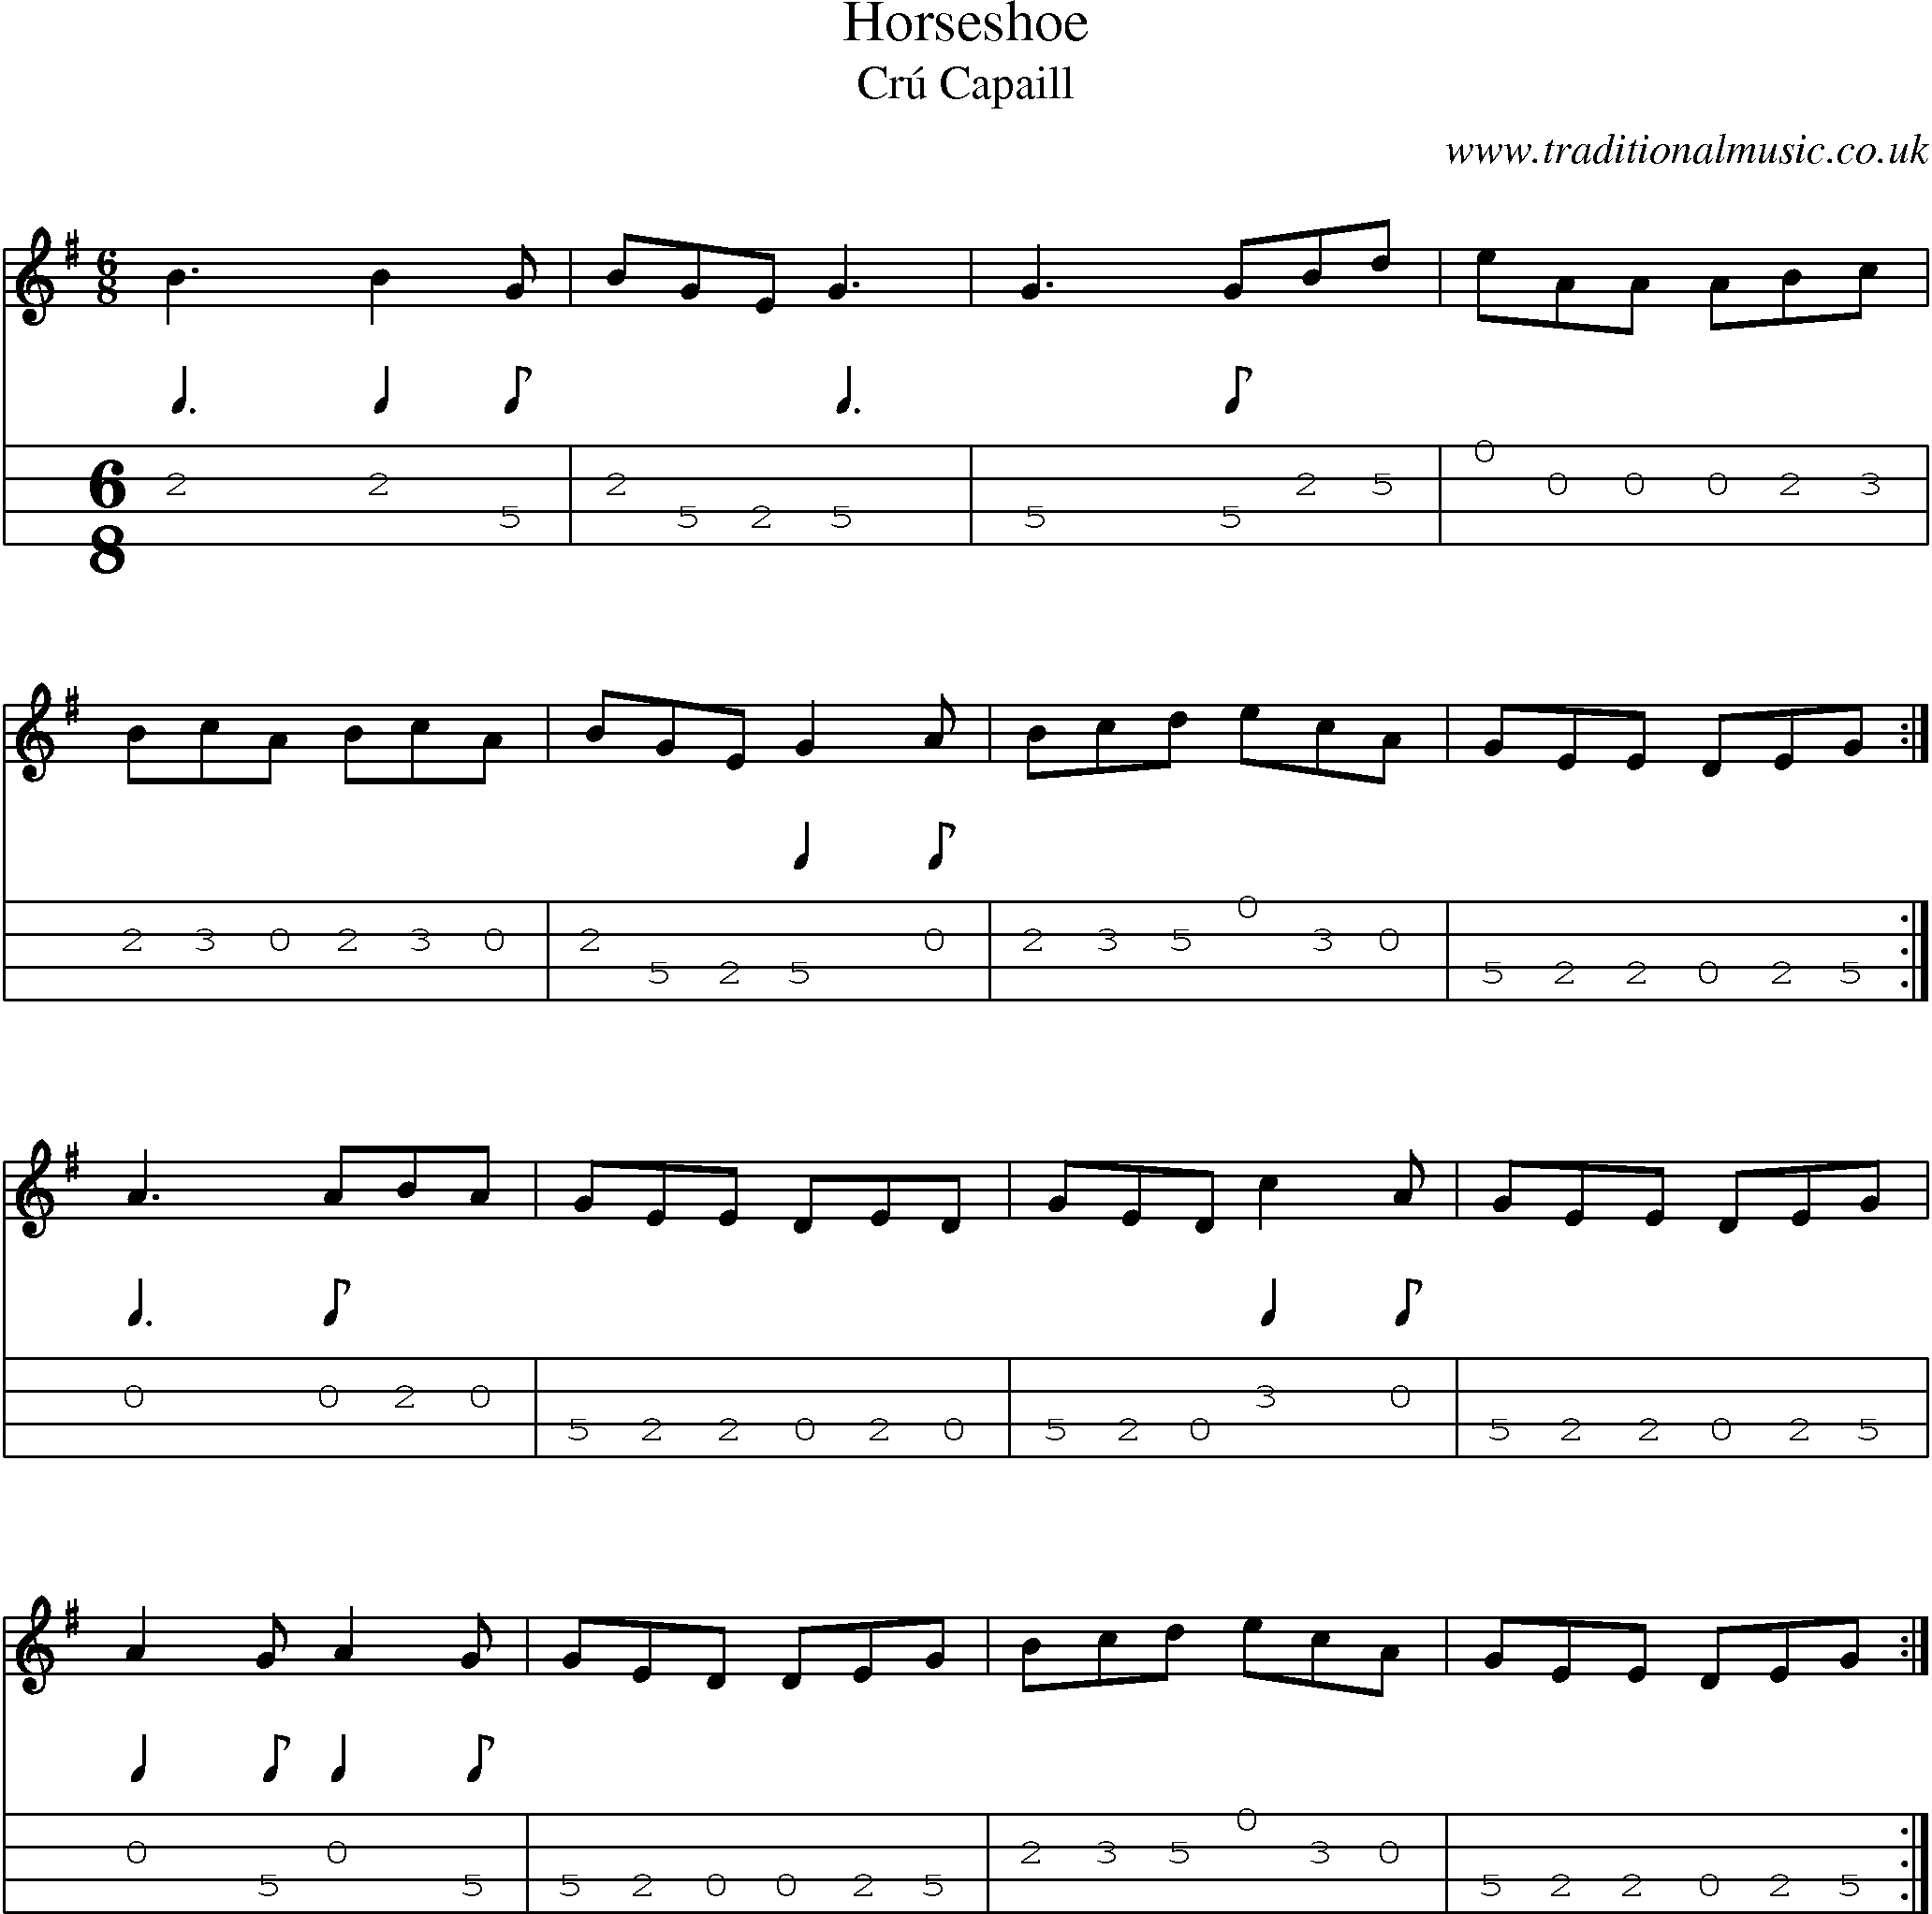 Music Score and Mandolin Tabs for Horseshoe